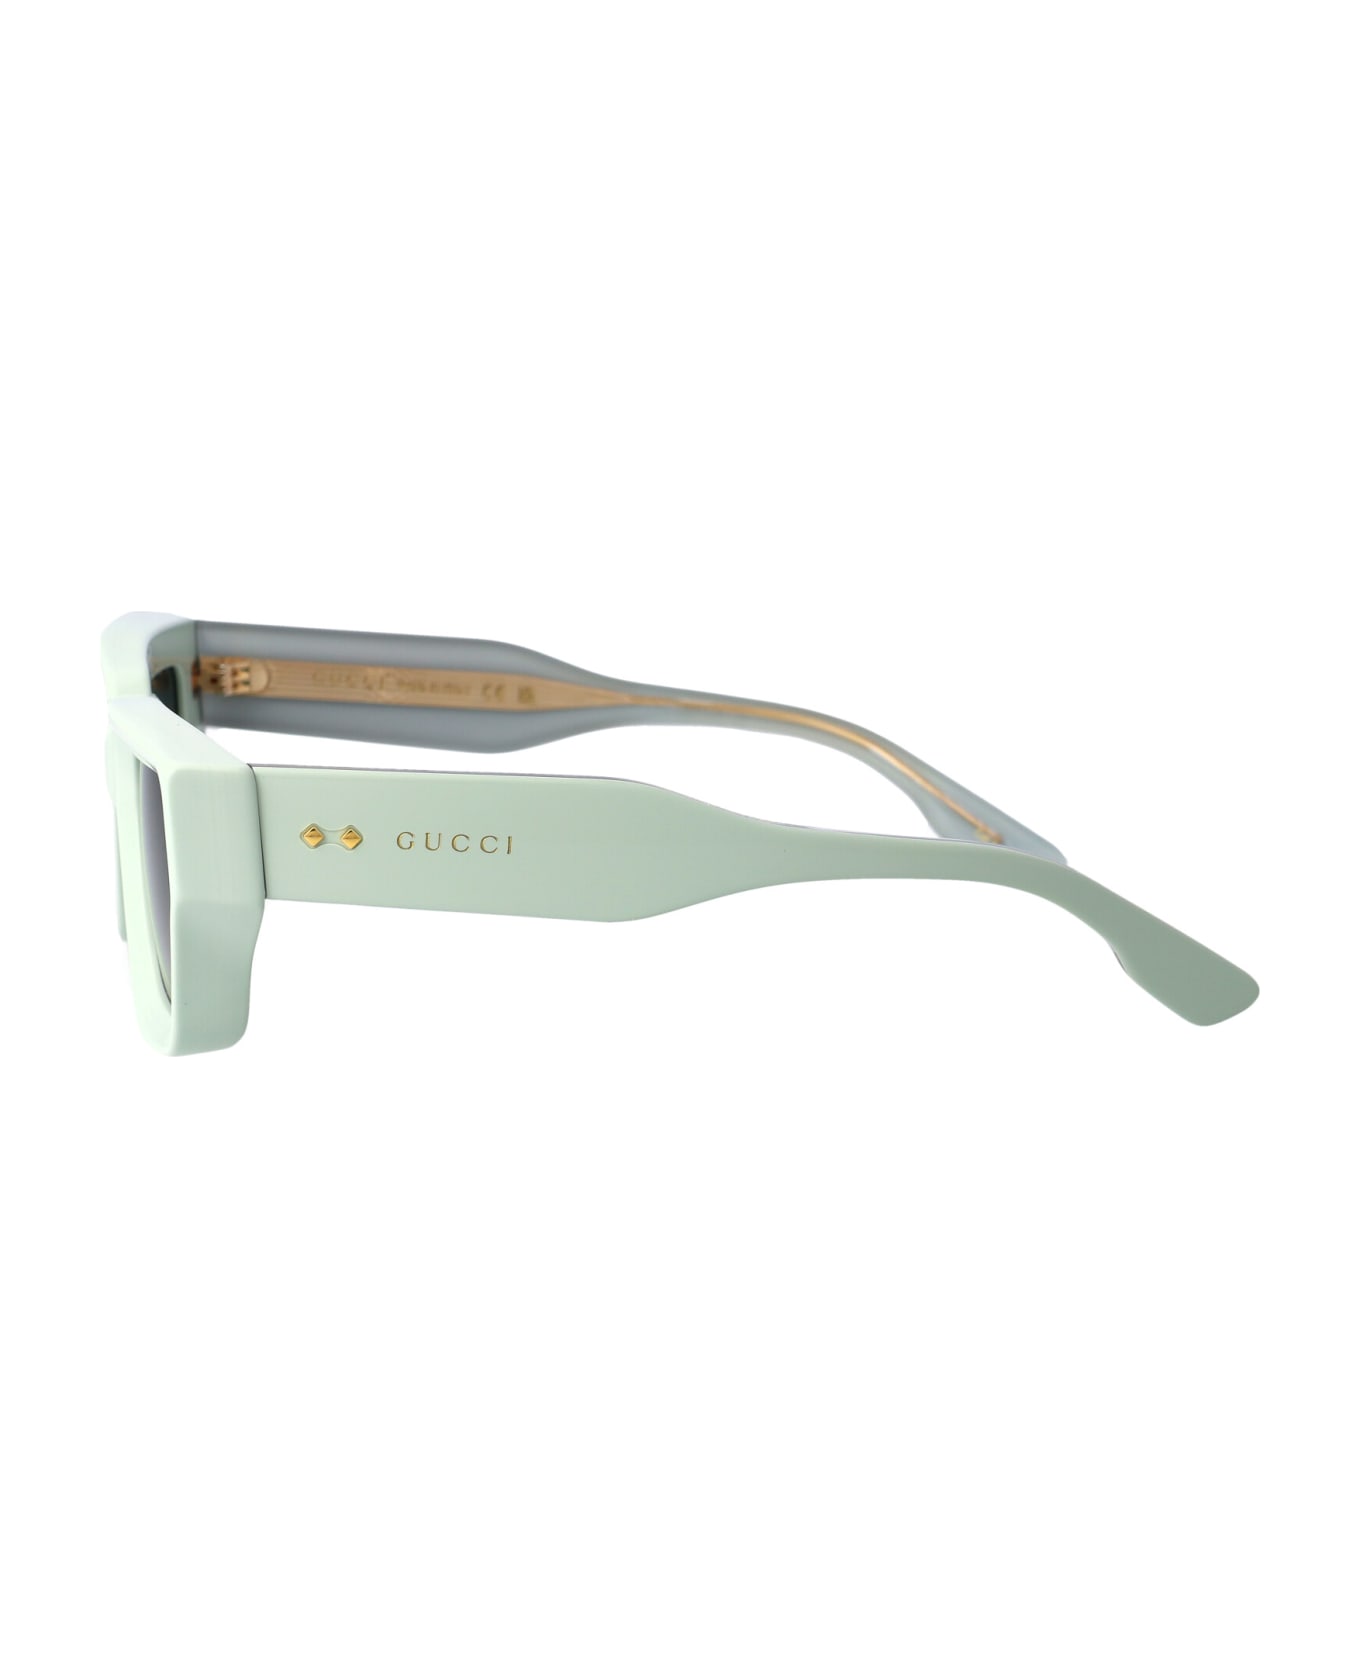 Gucci Eyewear Gg1529s Sunglasses - 003 GREEN GREEN GREY